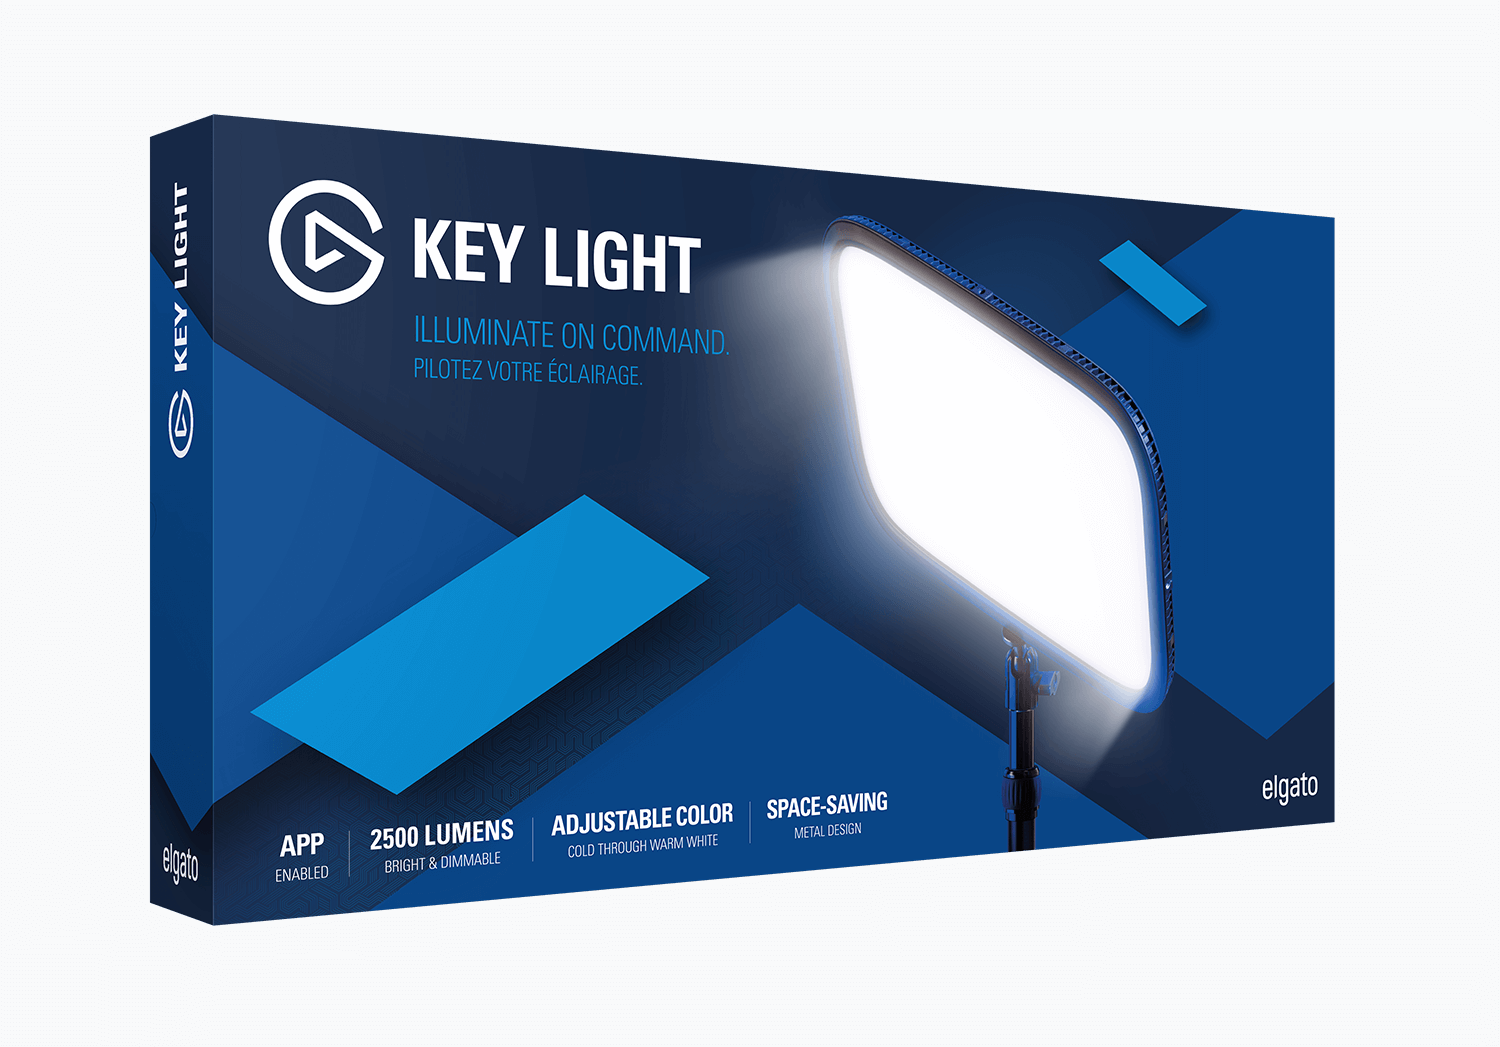 Elgato Keylight Air